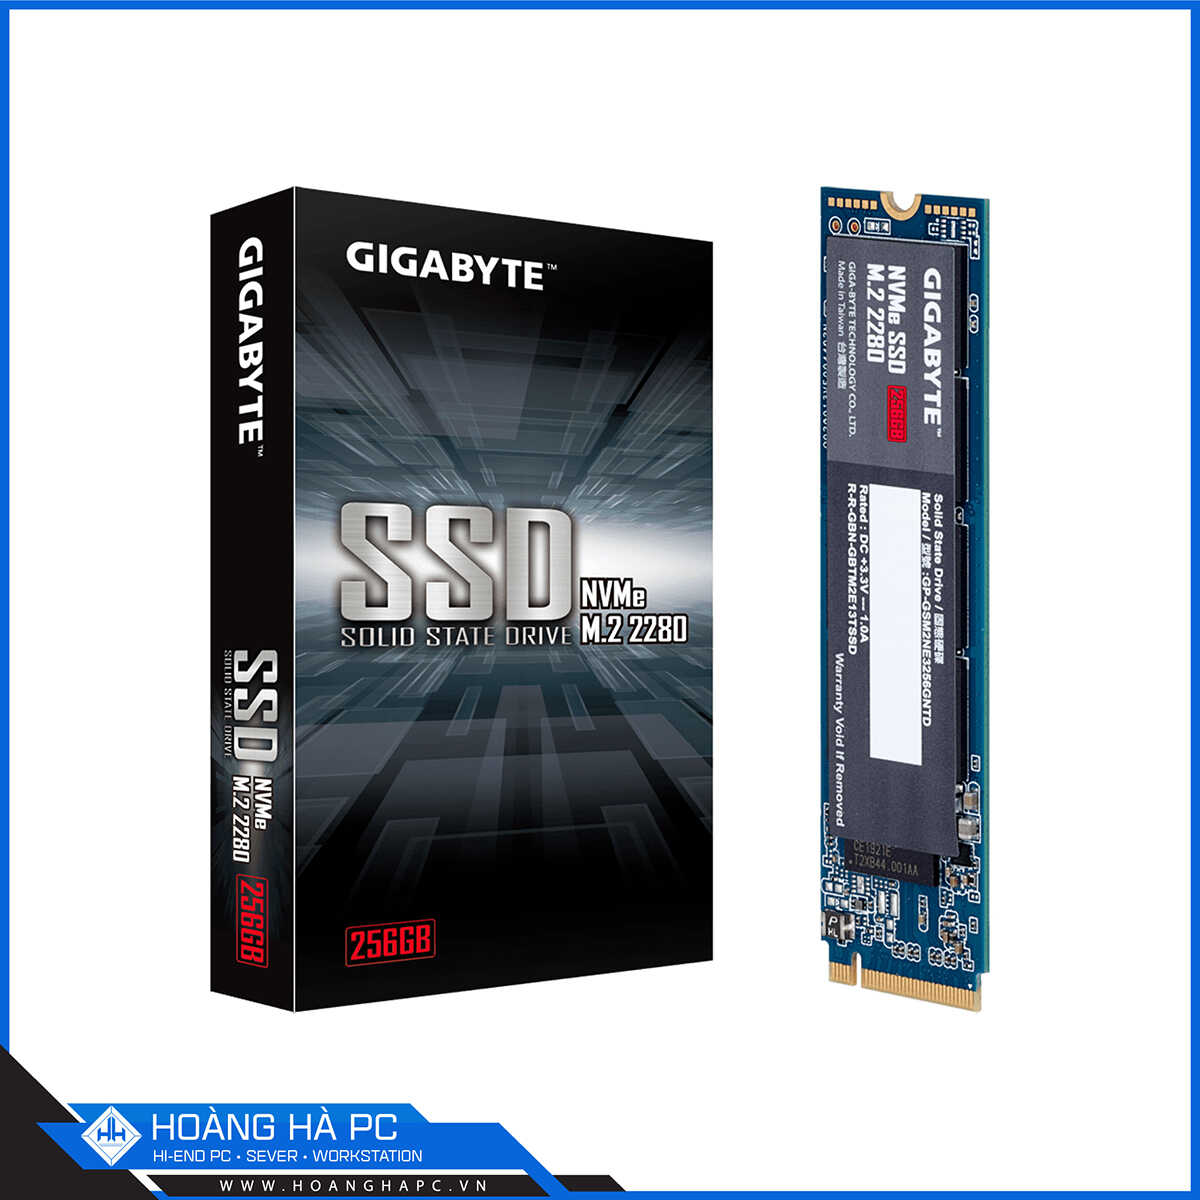 GIGABYTE NVMe SSD 256GB M.2 2280